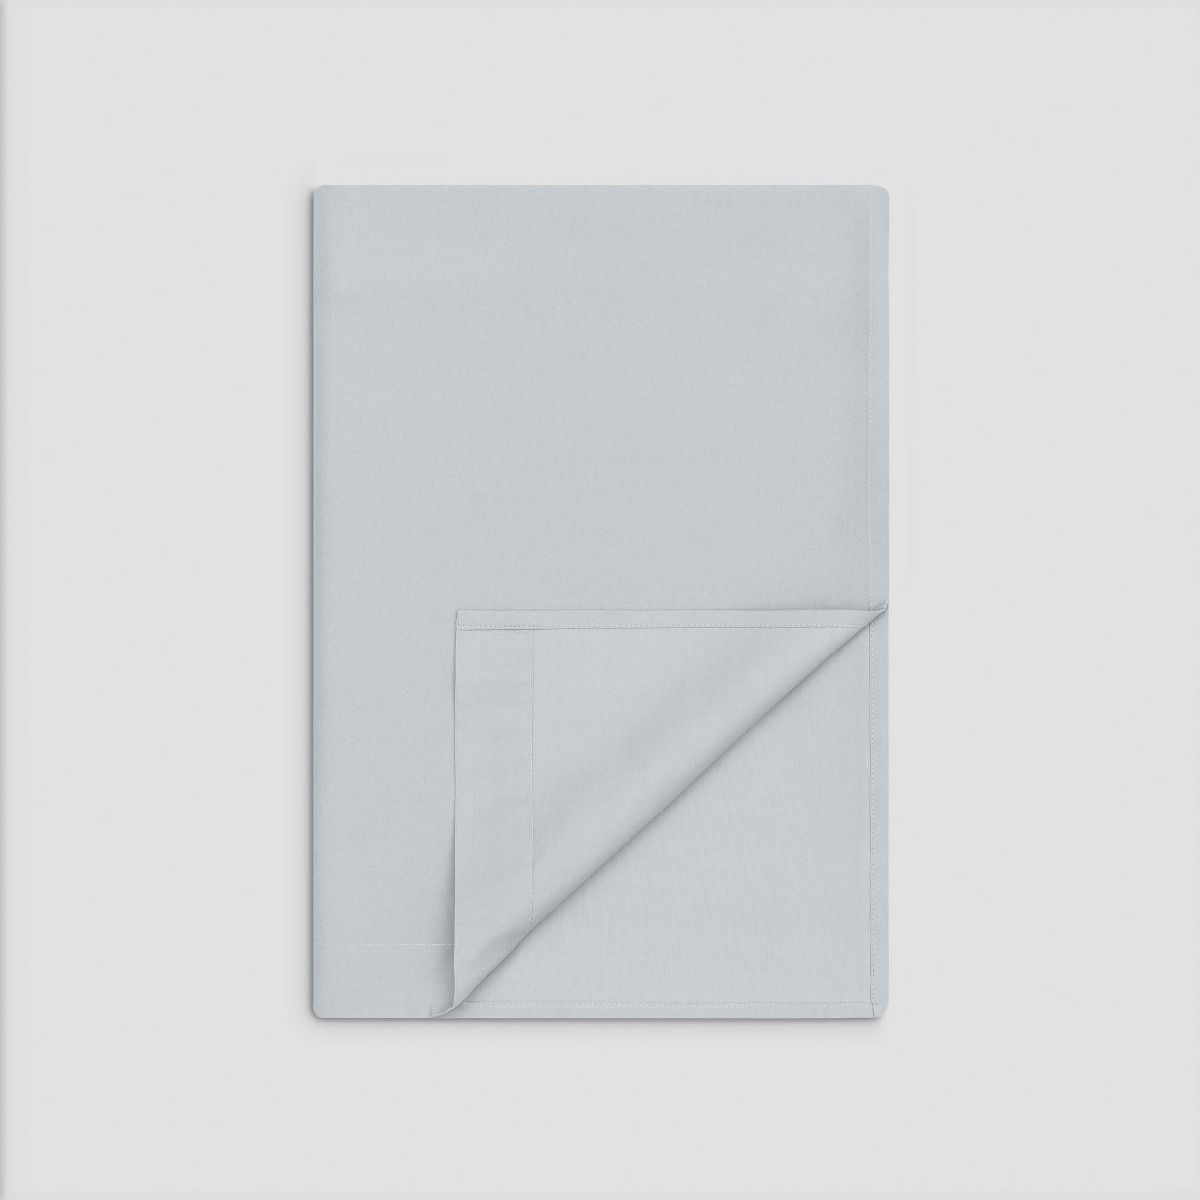 Простыня Togas Роял серая 270х300 см, цвет серый - фото 3